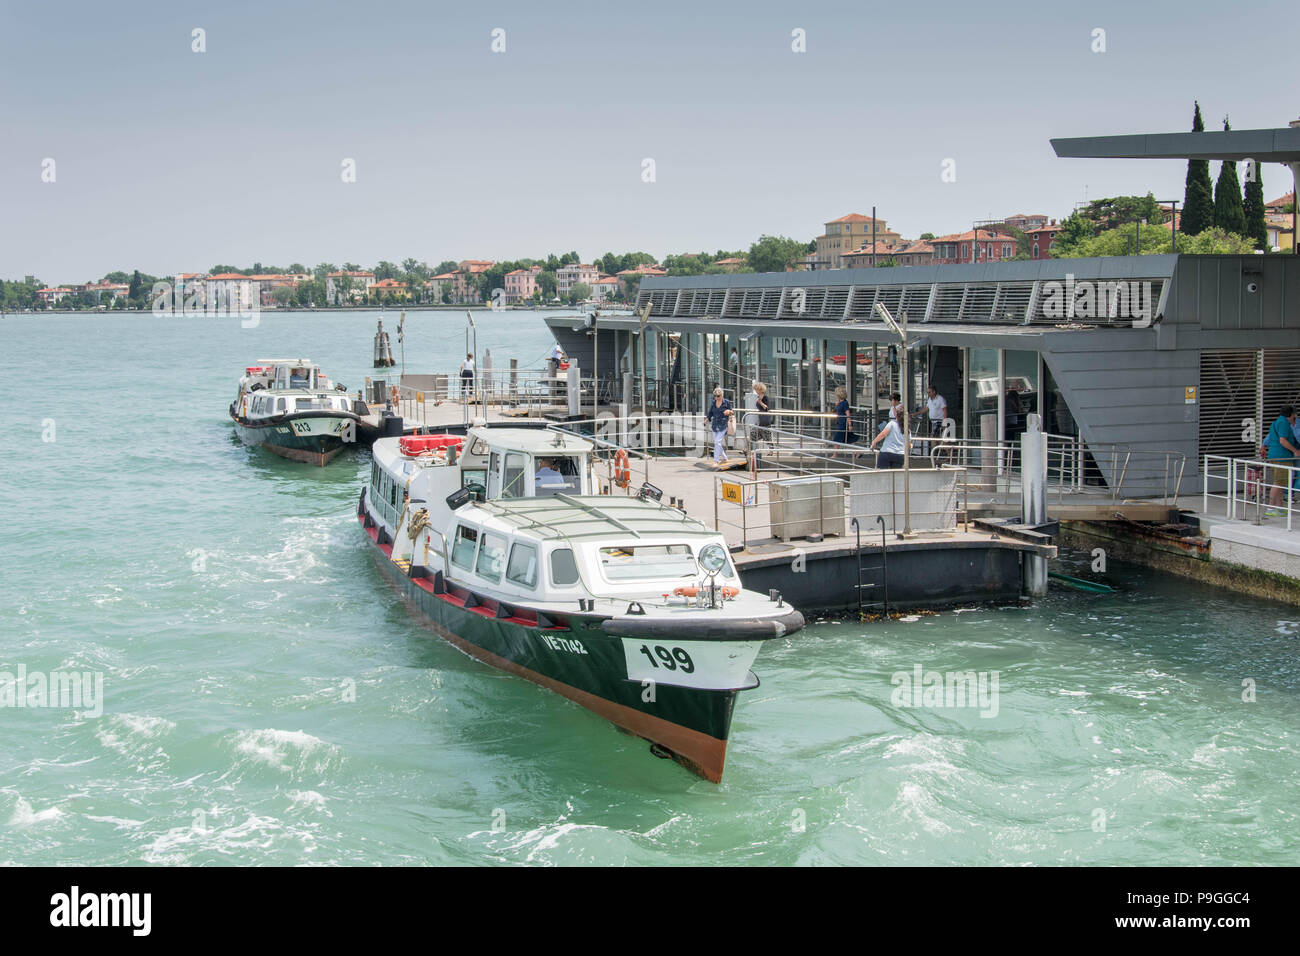 Europe, Italy, Veneto,Venice. Water tram (vaporetto) station at Lido di Venezia. Two water trams moored at the wharf. Stock Photo